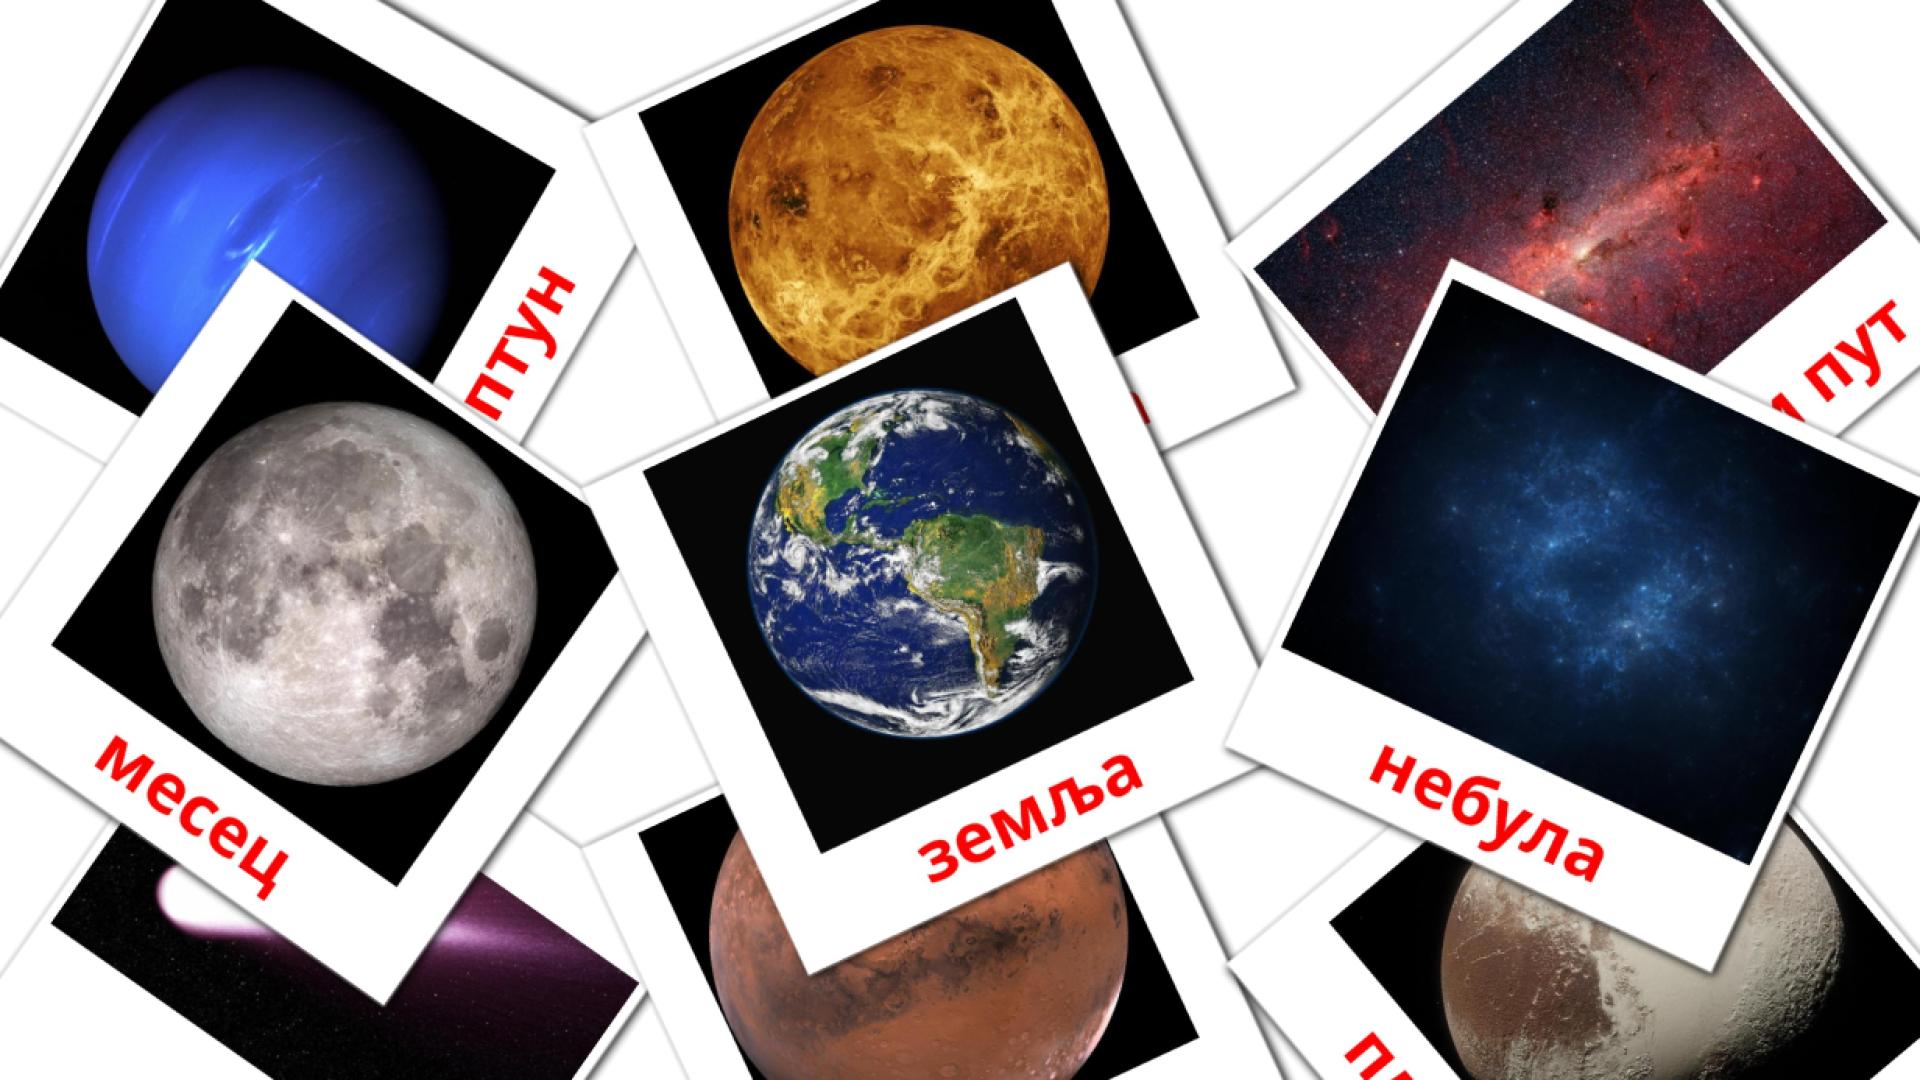 Bildkarten für Сунчев систем